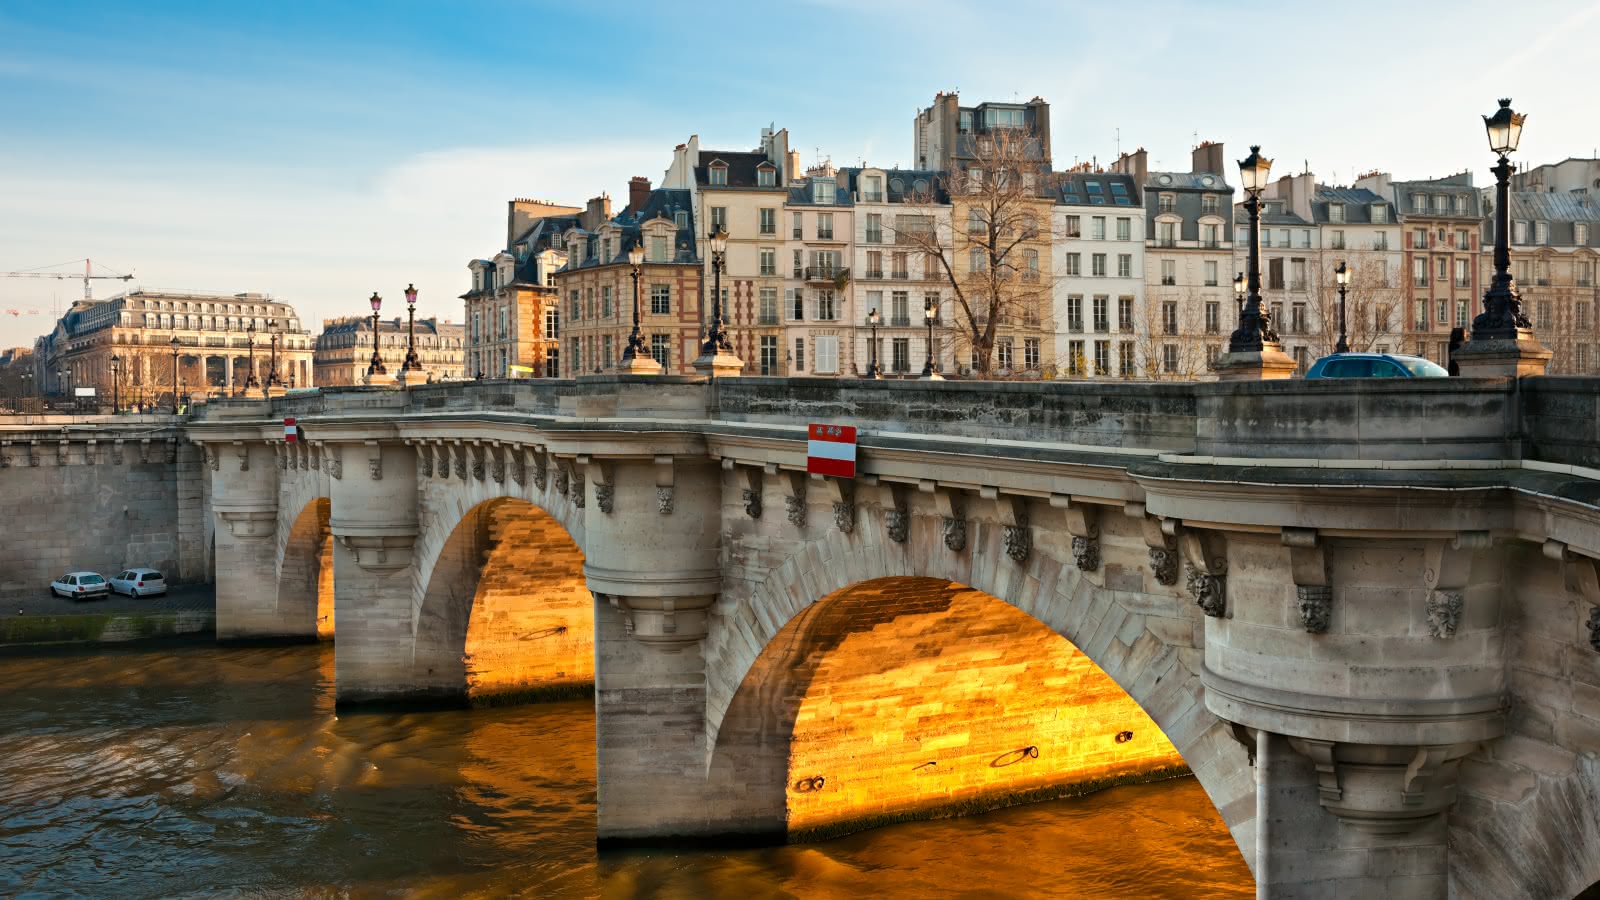 Free Tour of Paris - SANDEMANs NEW Europe